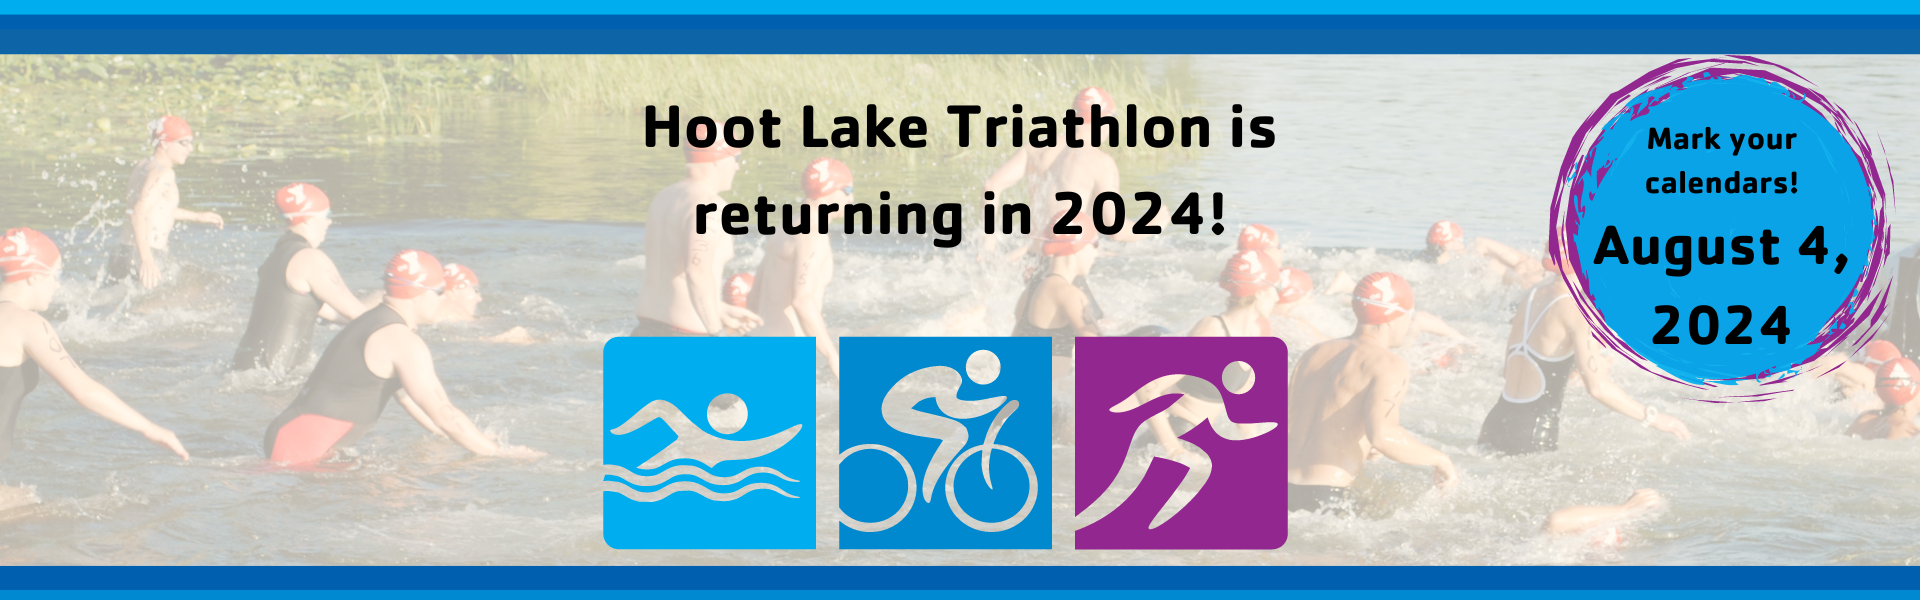 Hoot Lake Triathlon 